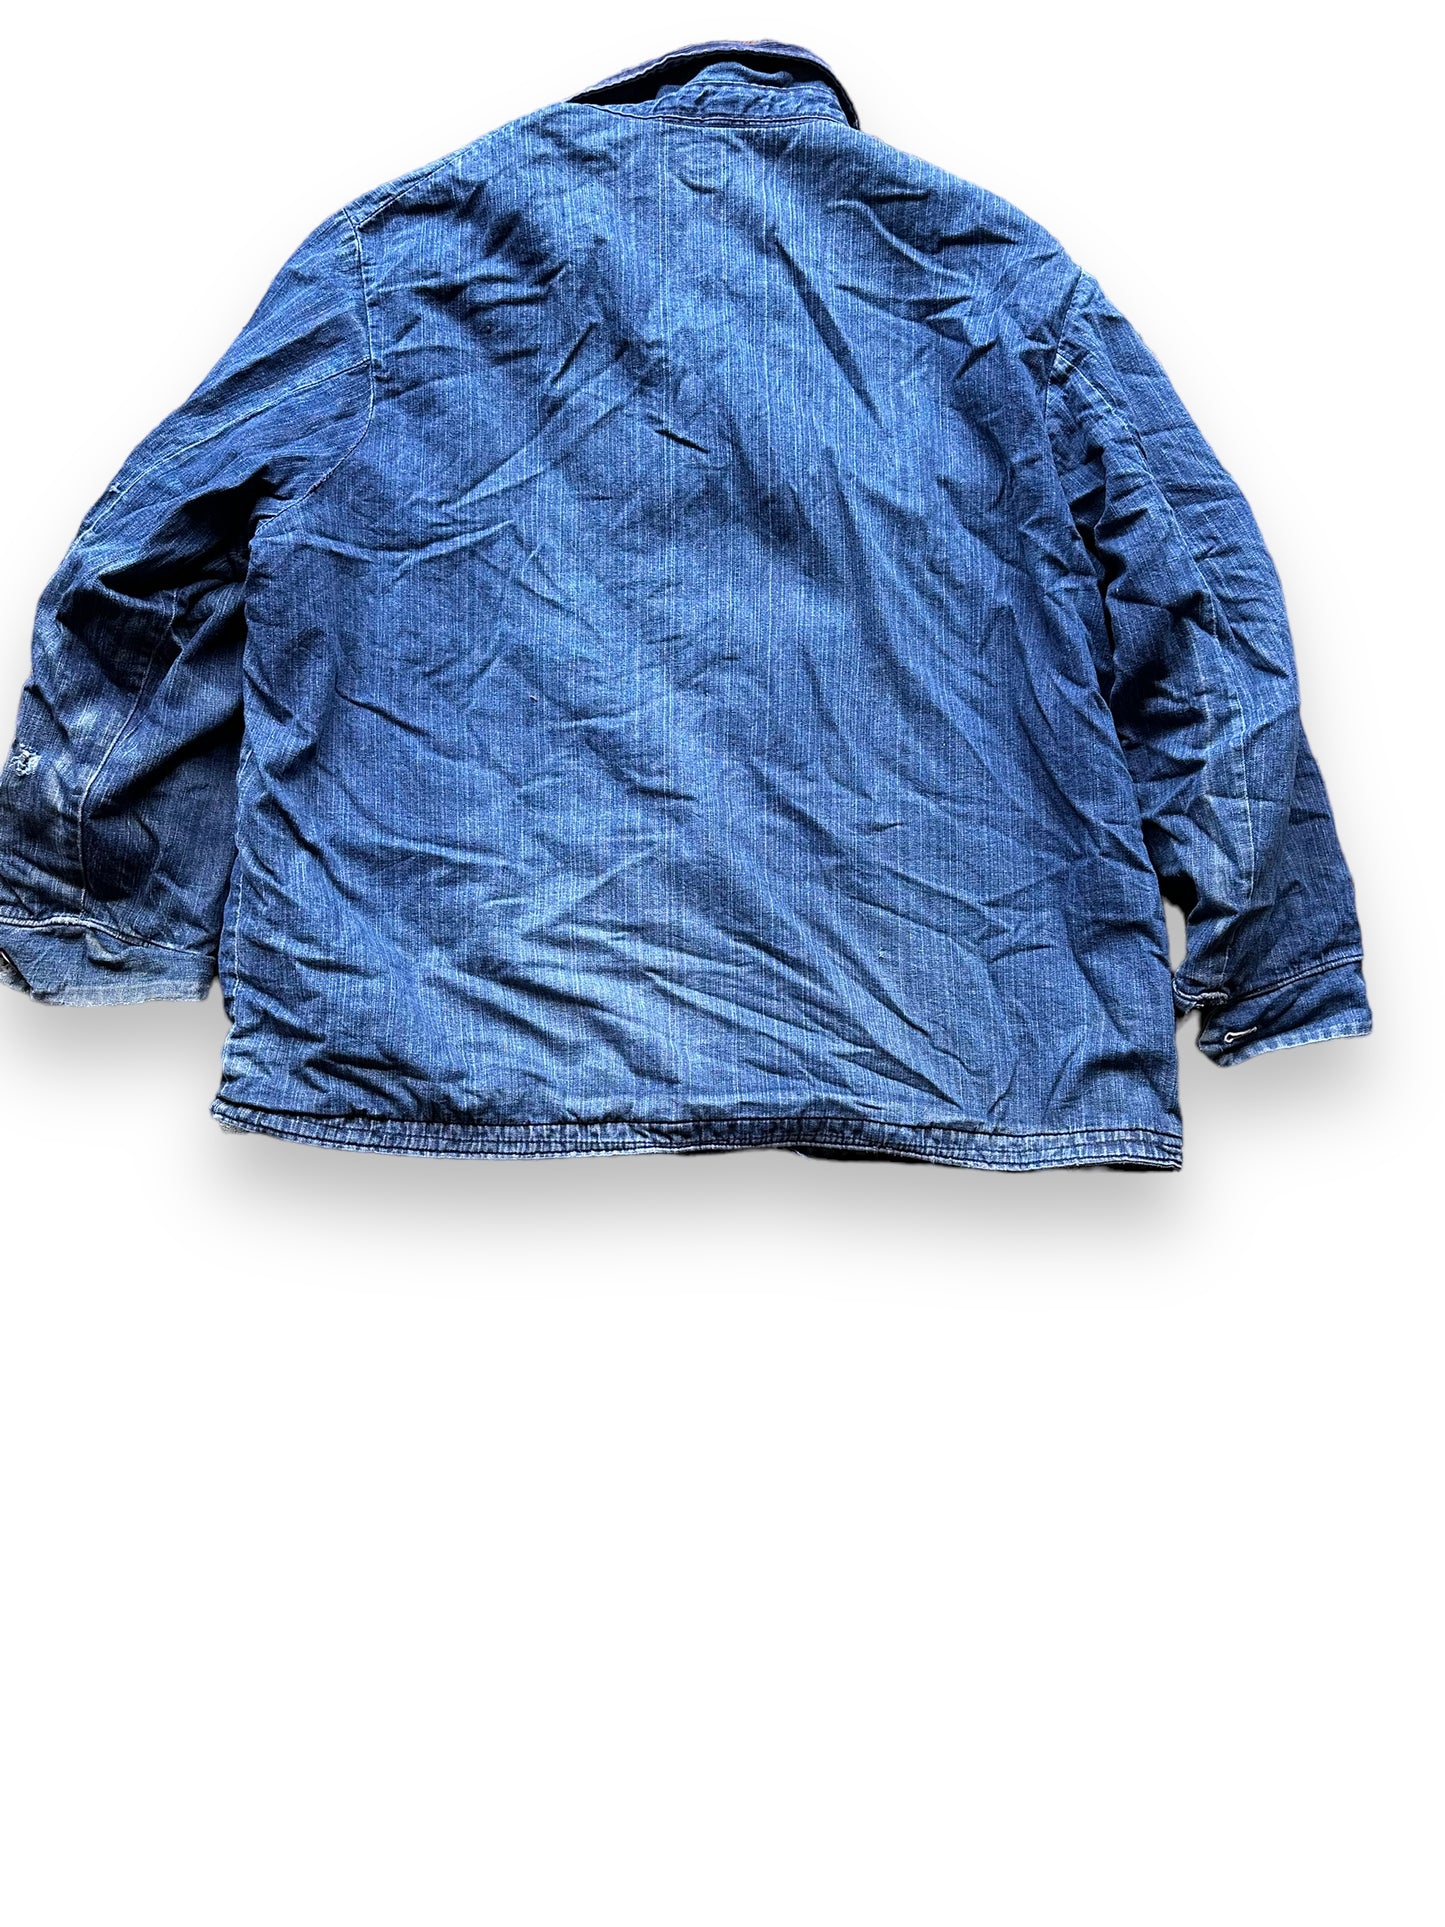 Rear View of Vintage Blanket Lined Wrangler Blue Bell Chore Coat SZ 50 | Vintage Denim Jacket Seattle | Seattle Vintage Clothing